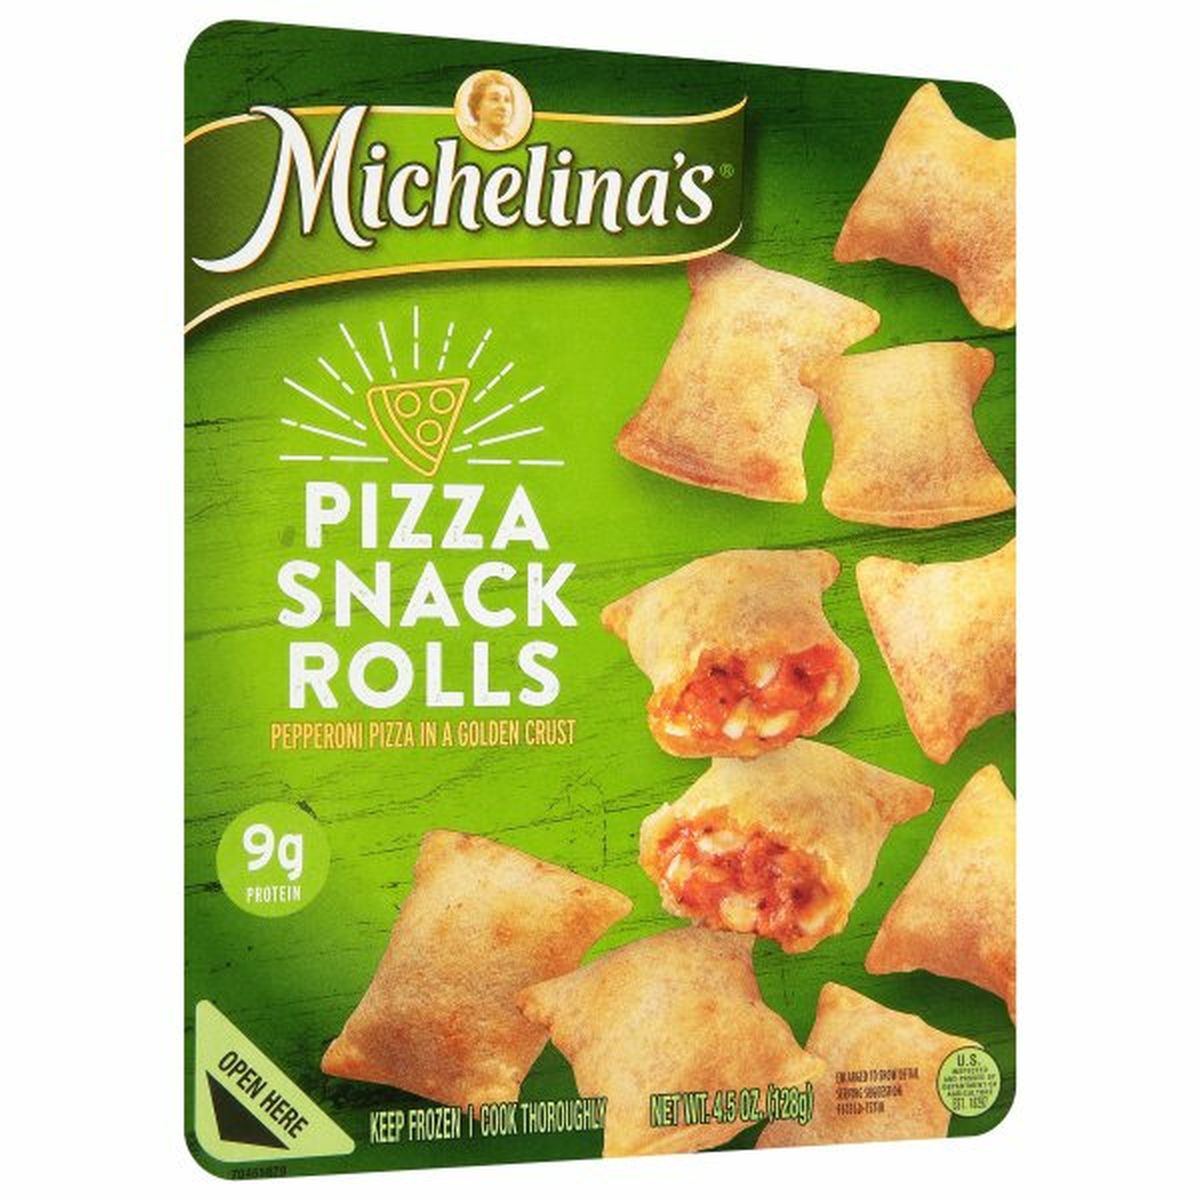 Calories in Michelina's Pizza Snack Rolls